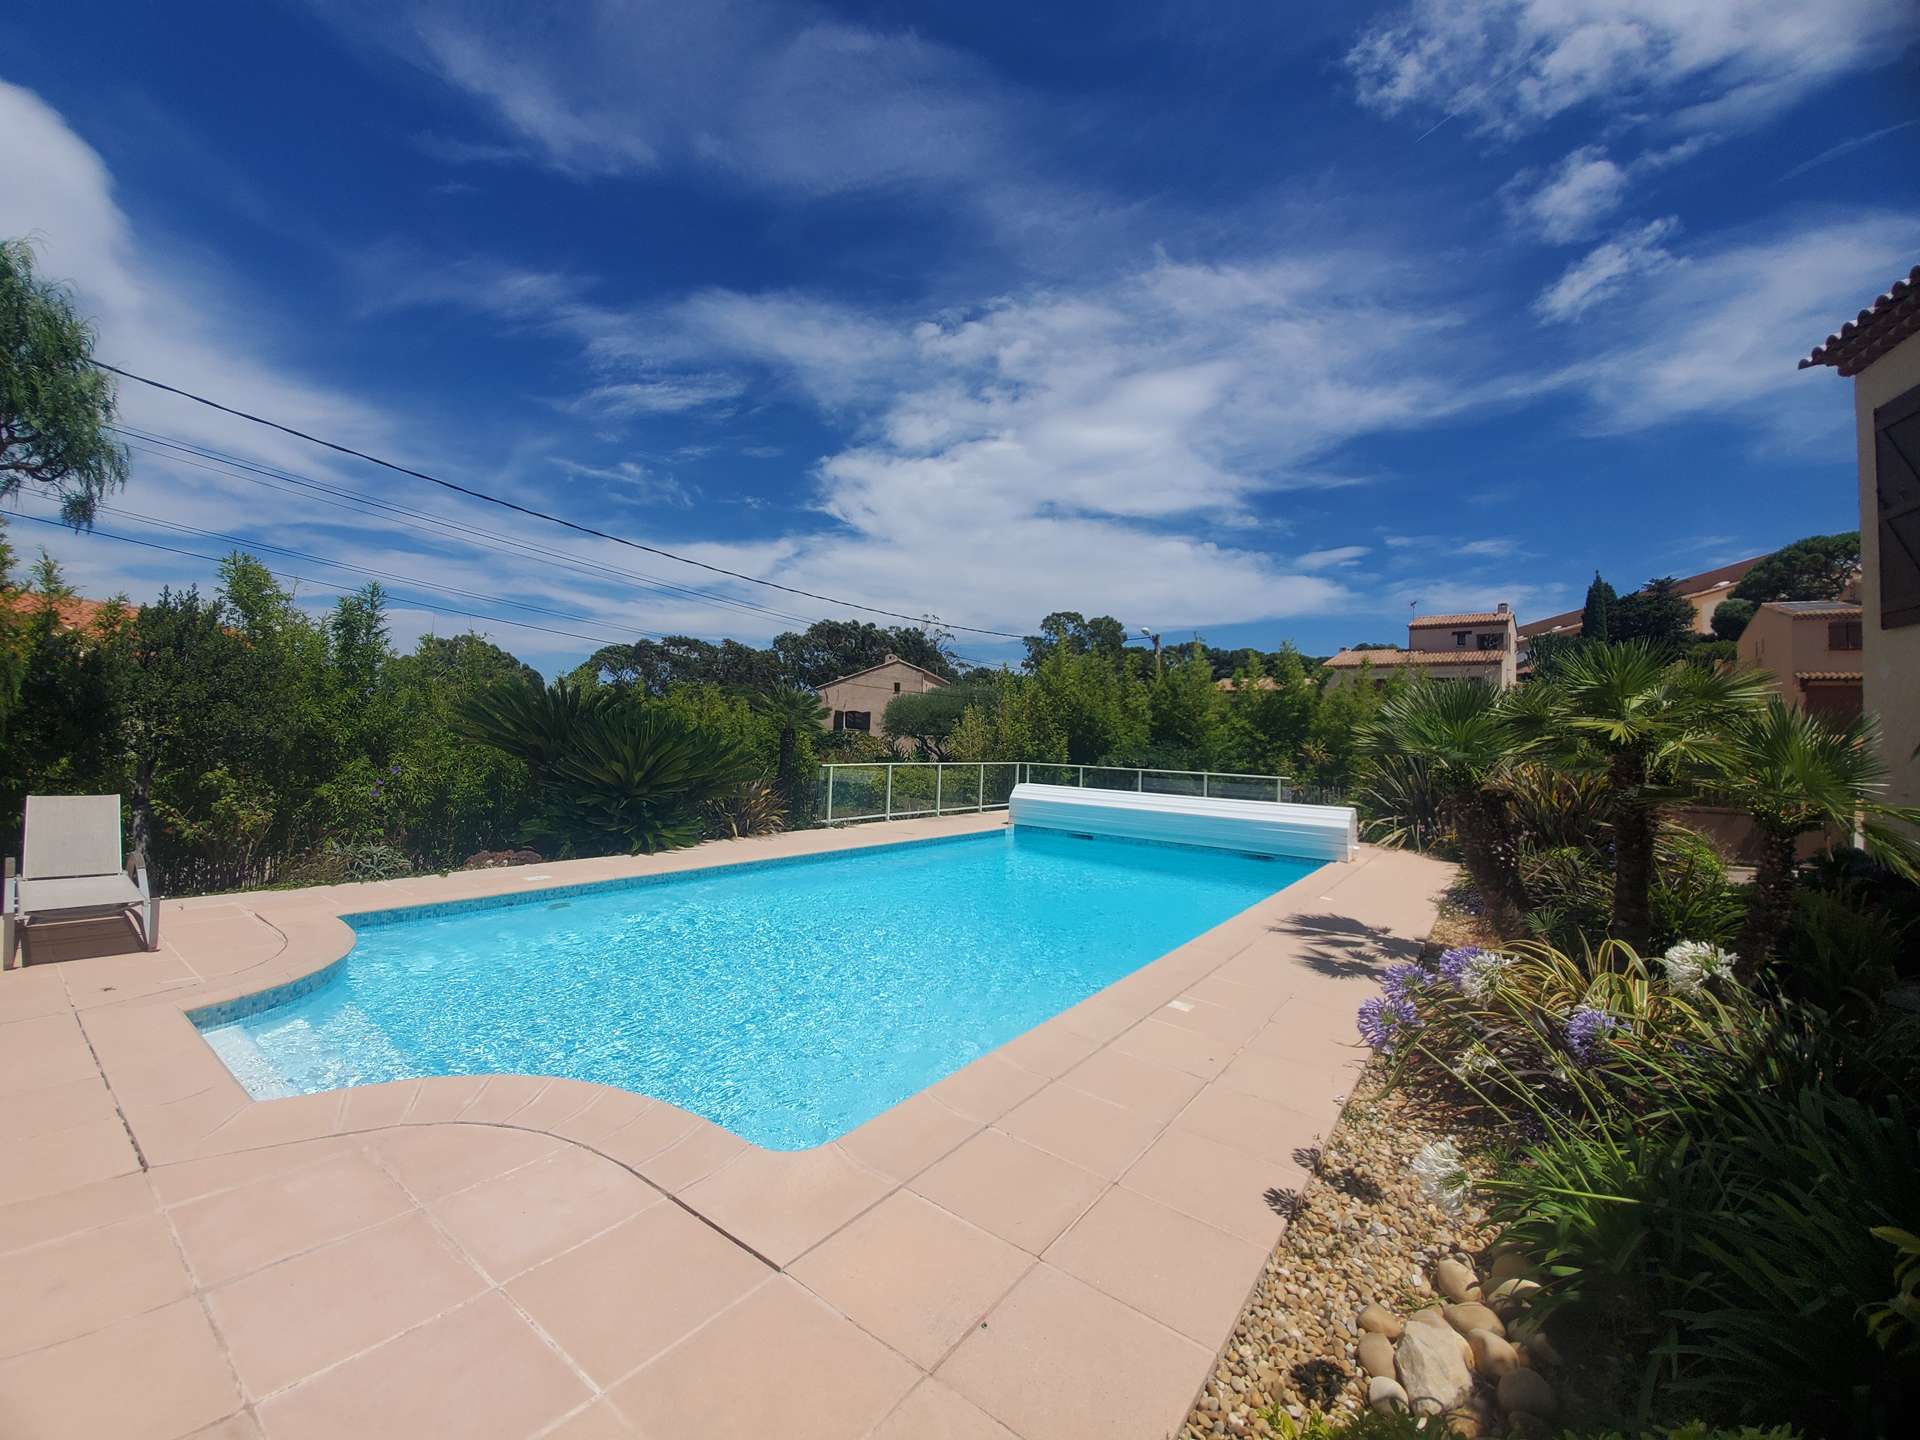  Villa avec piscine Hyères (Giens)